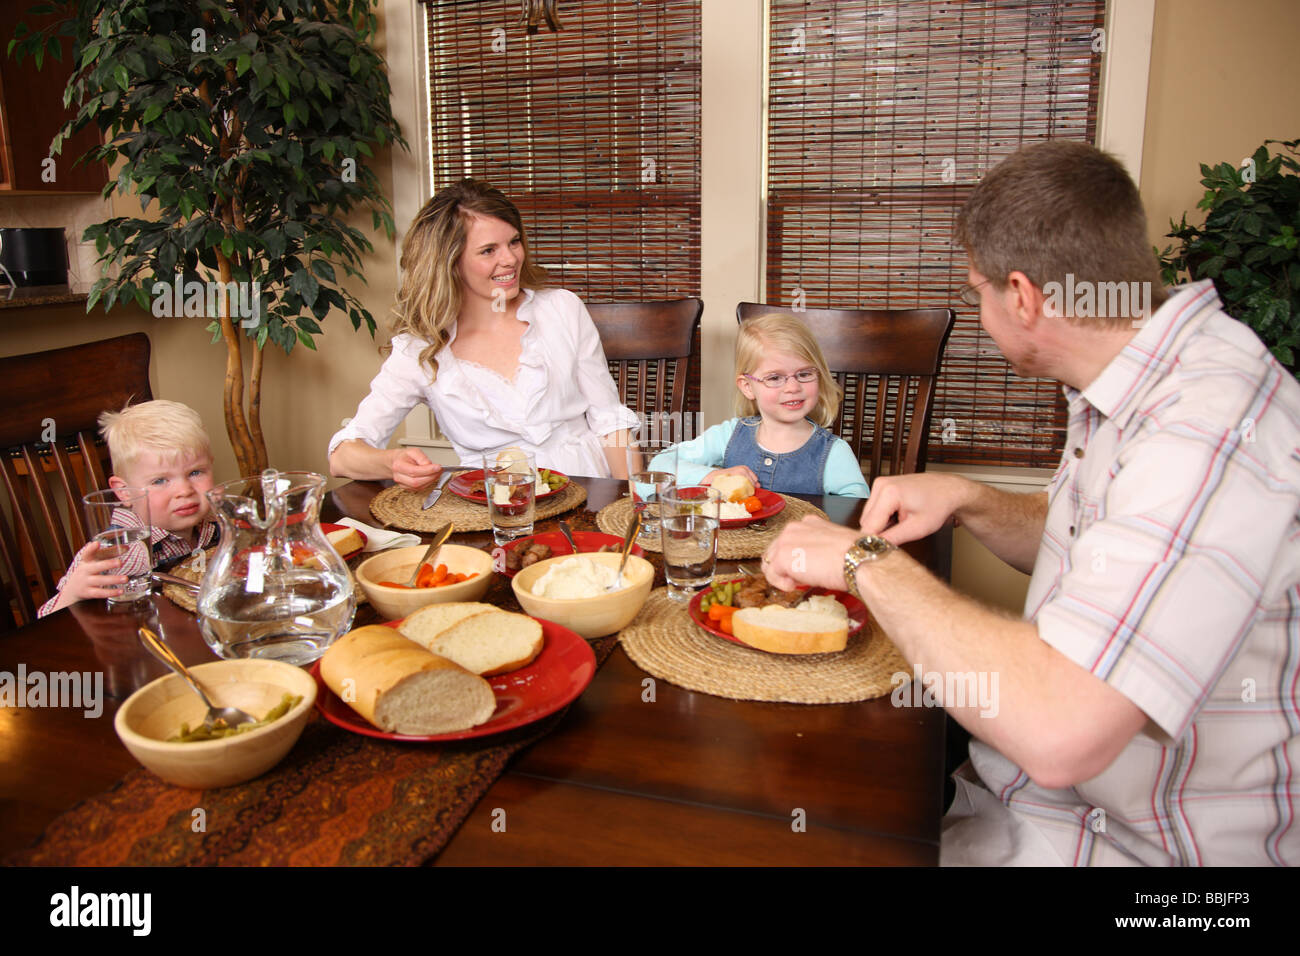 Family having dinner together Stock Photo